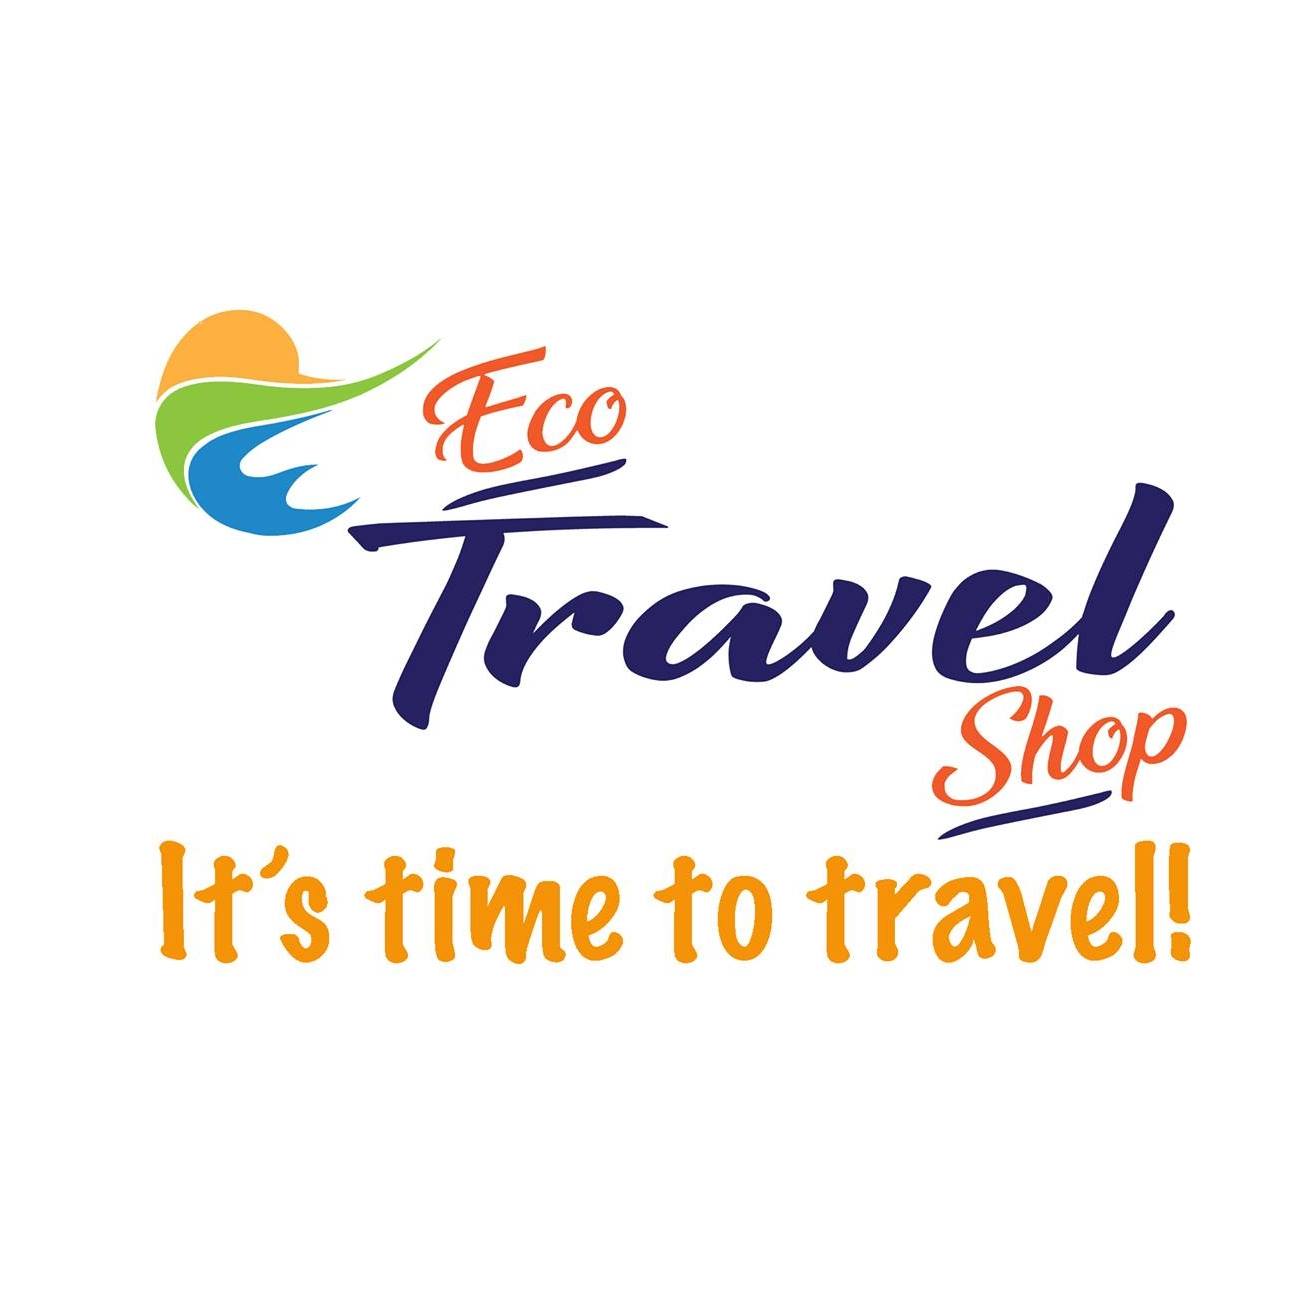 Eco Travel Shop